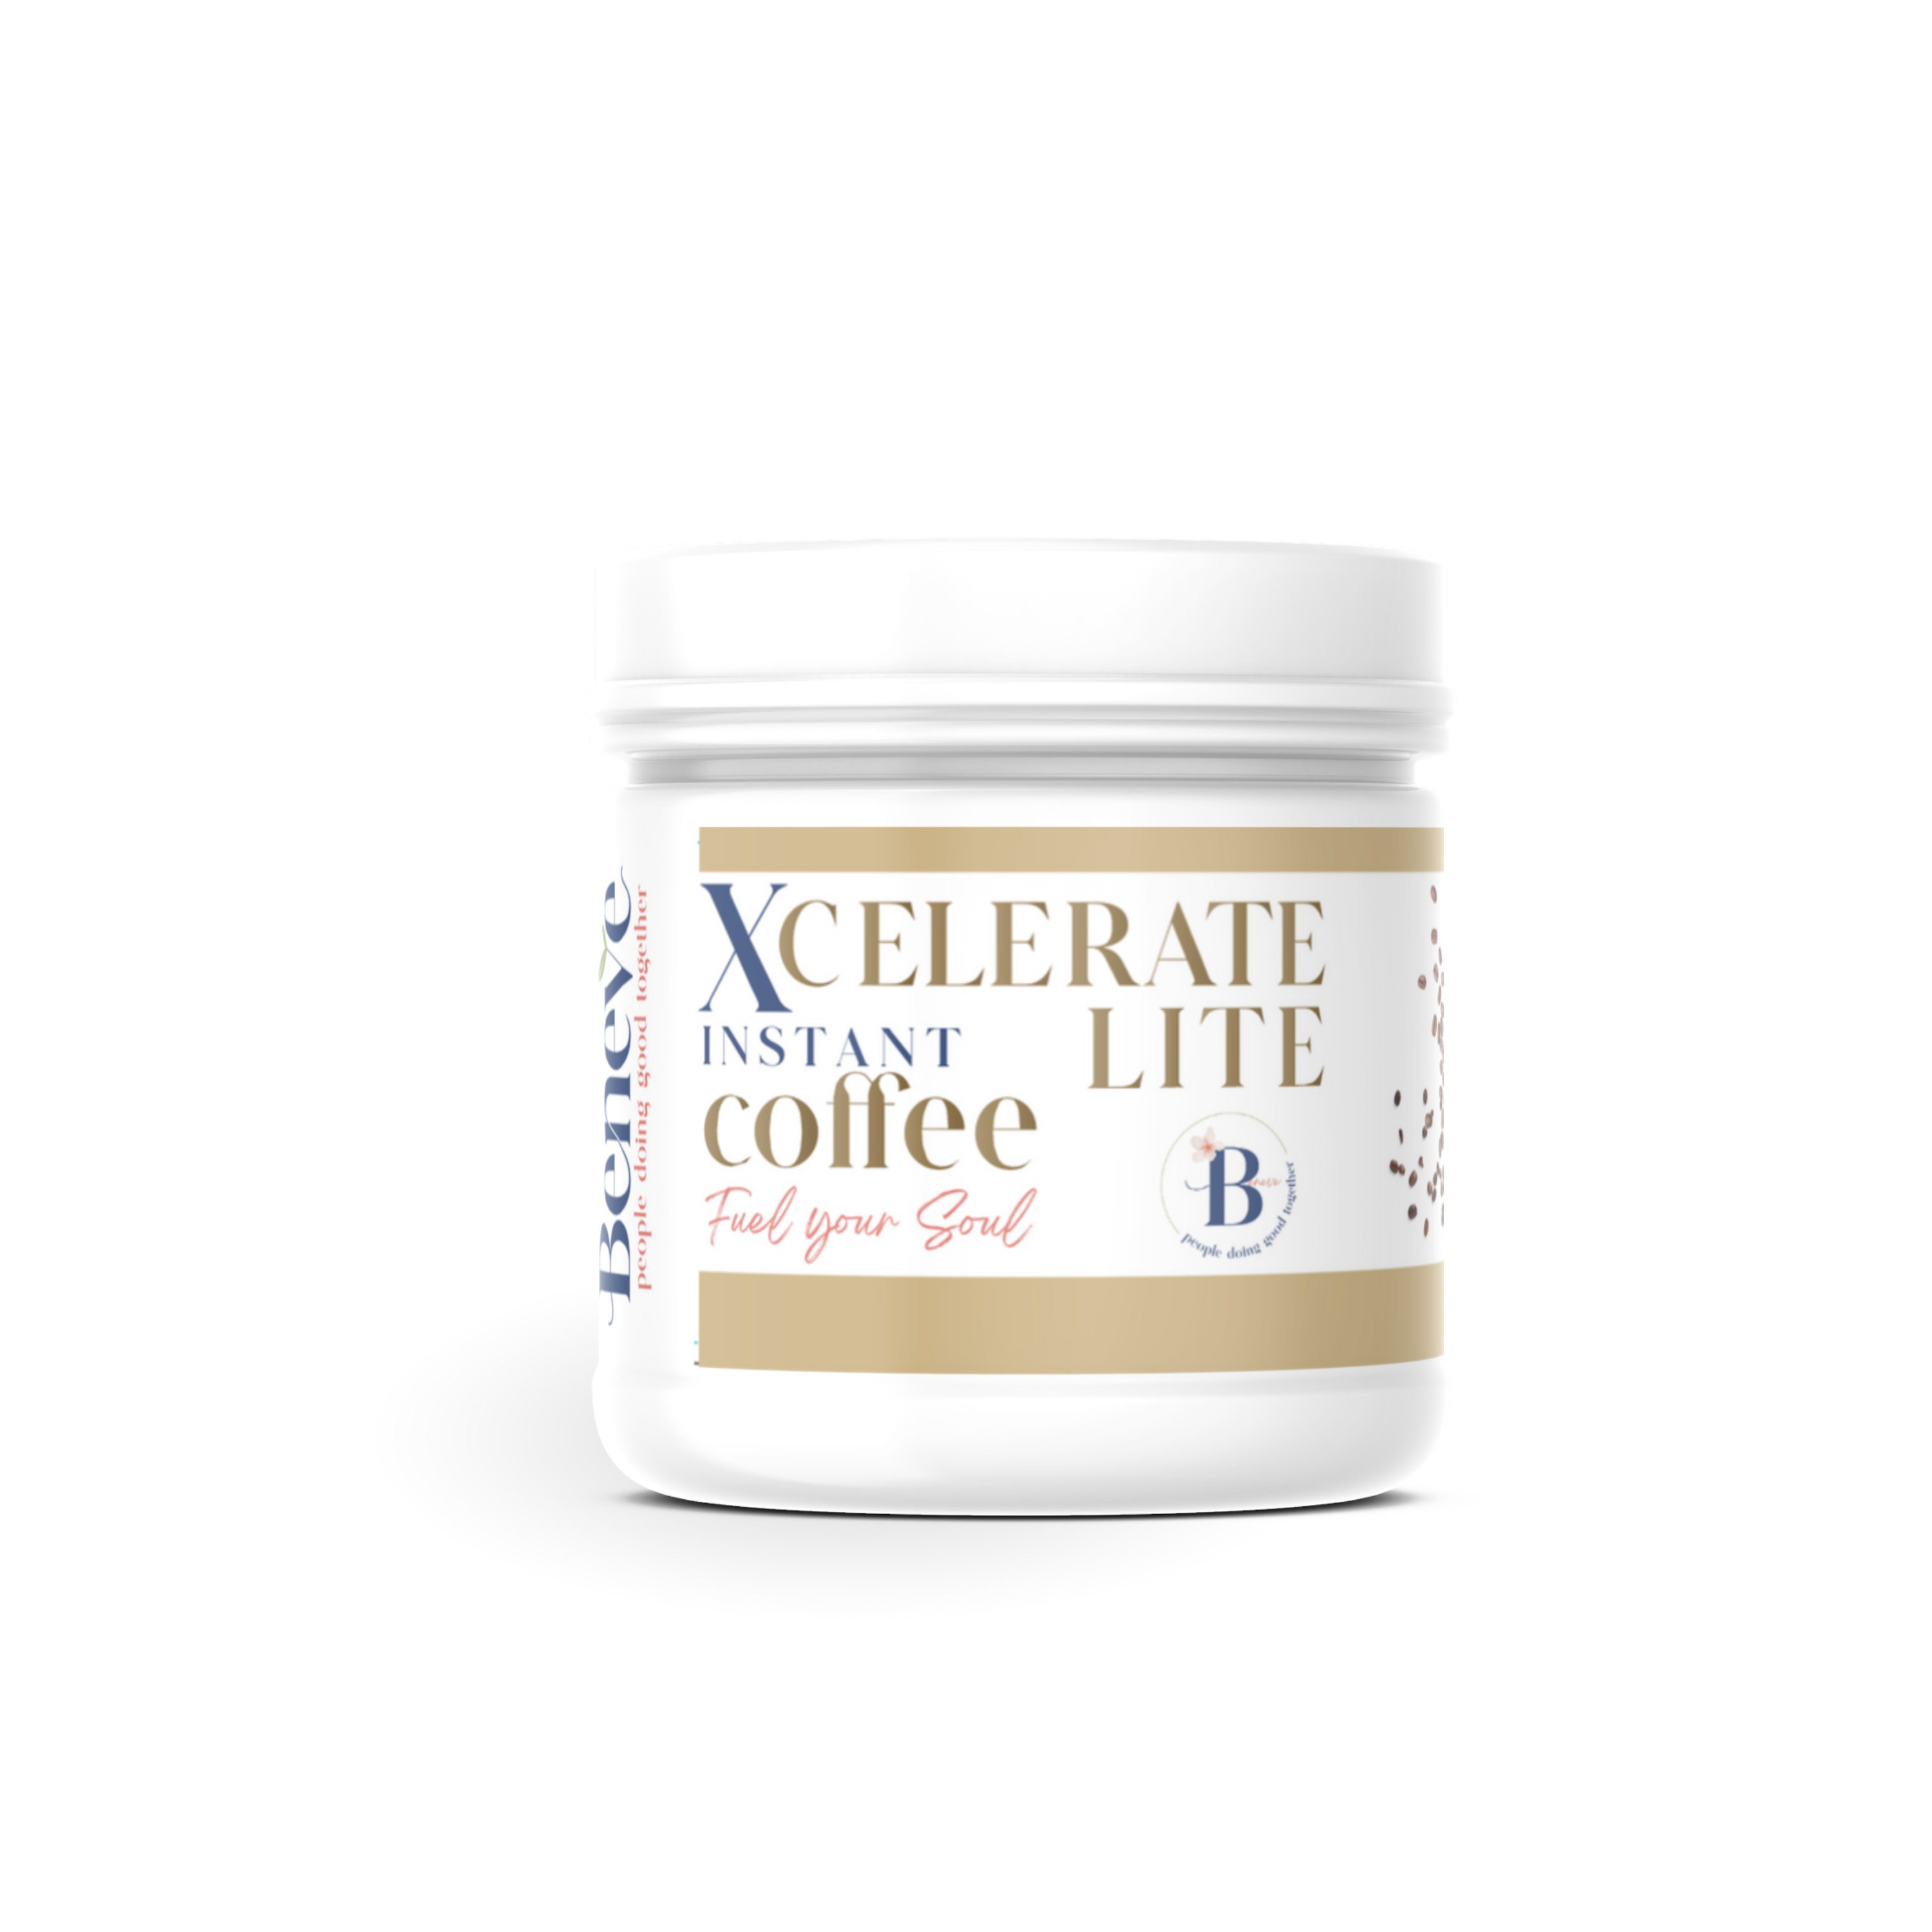 Xcelerate Lite Coffee TUB